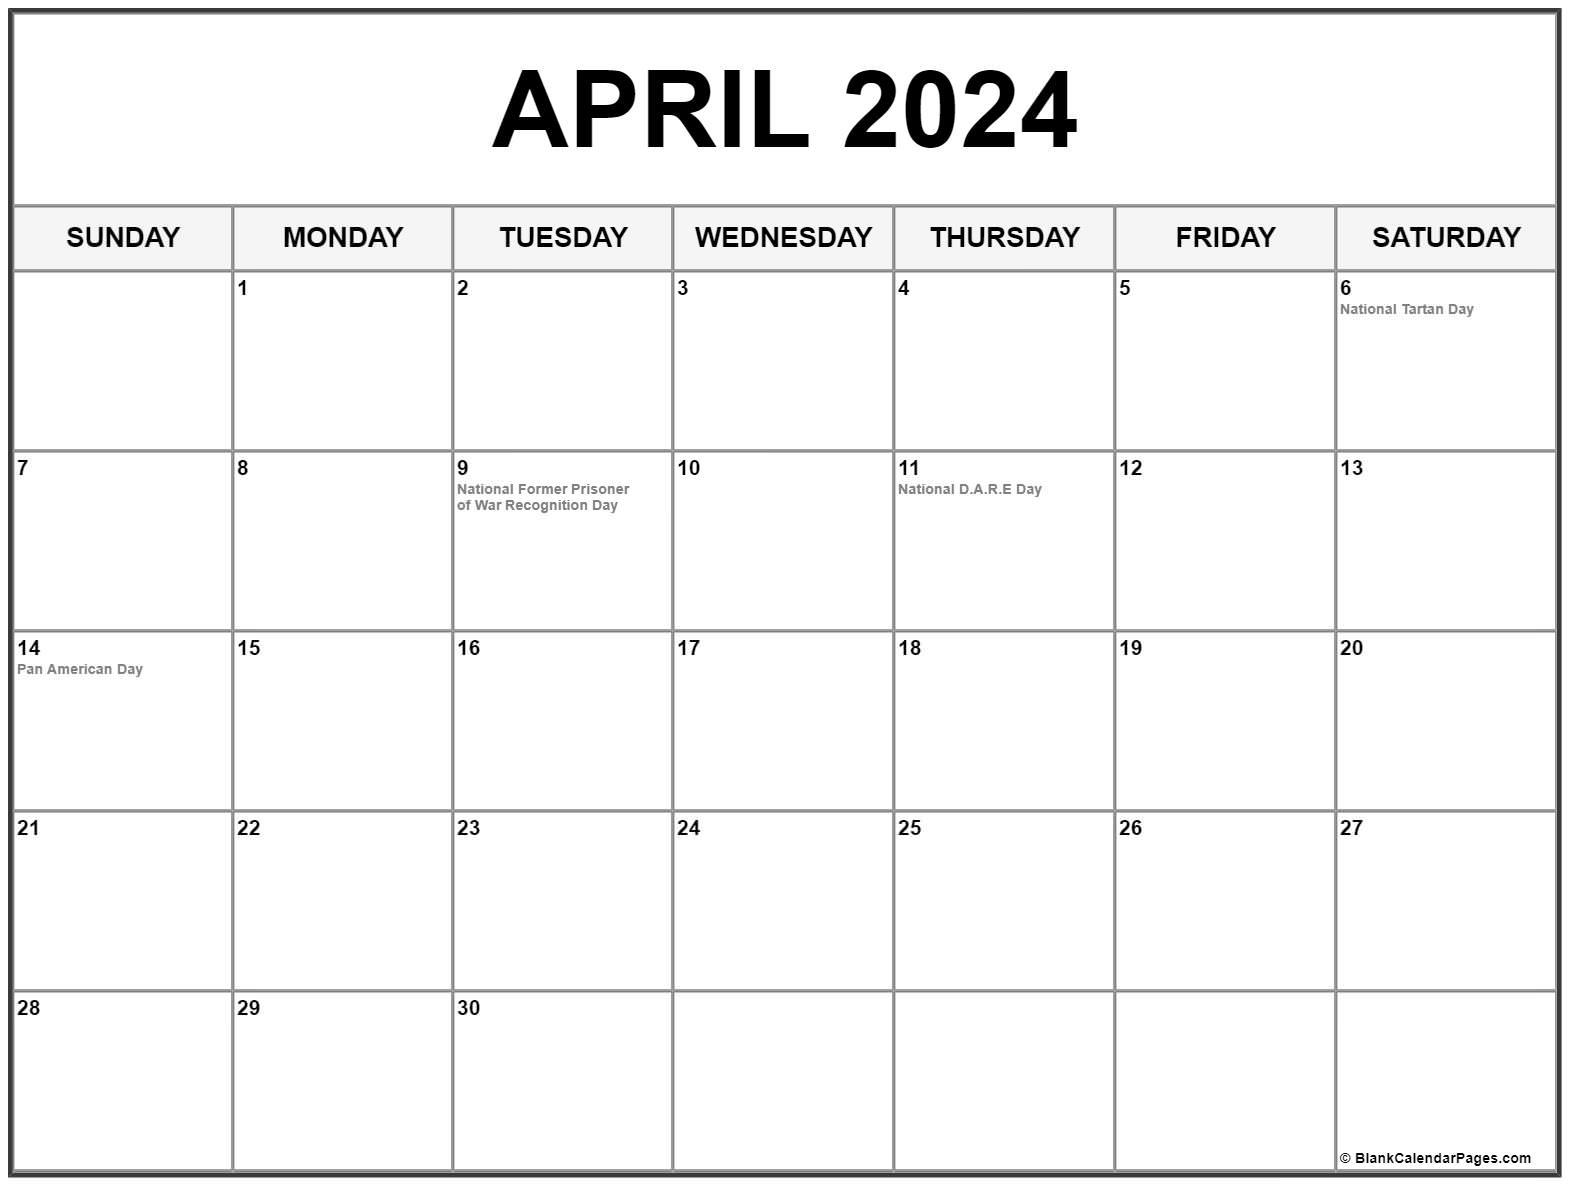 Easter 2024 Date Calendar Lina Shelby